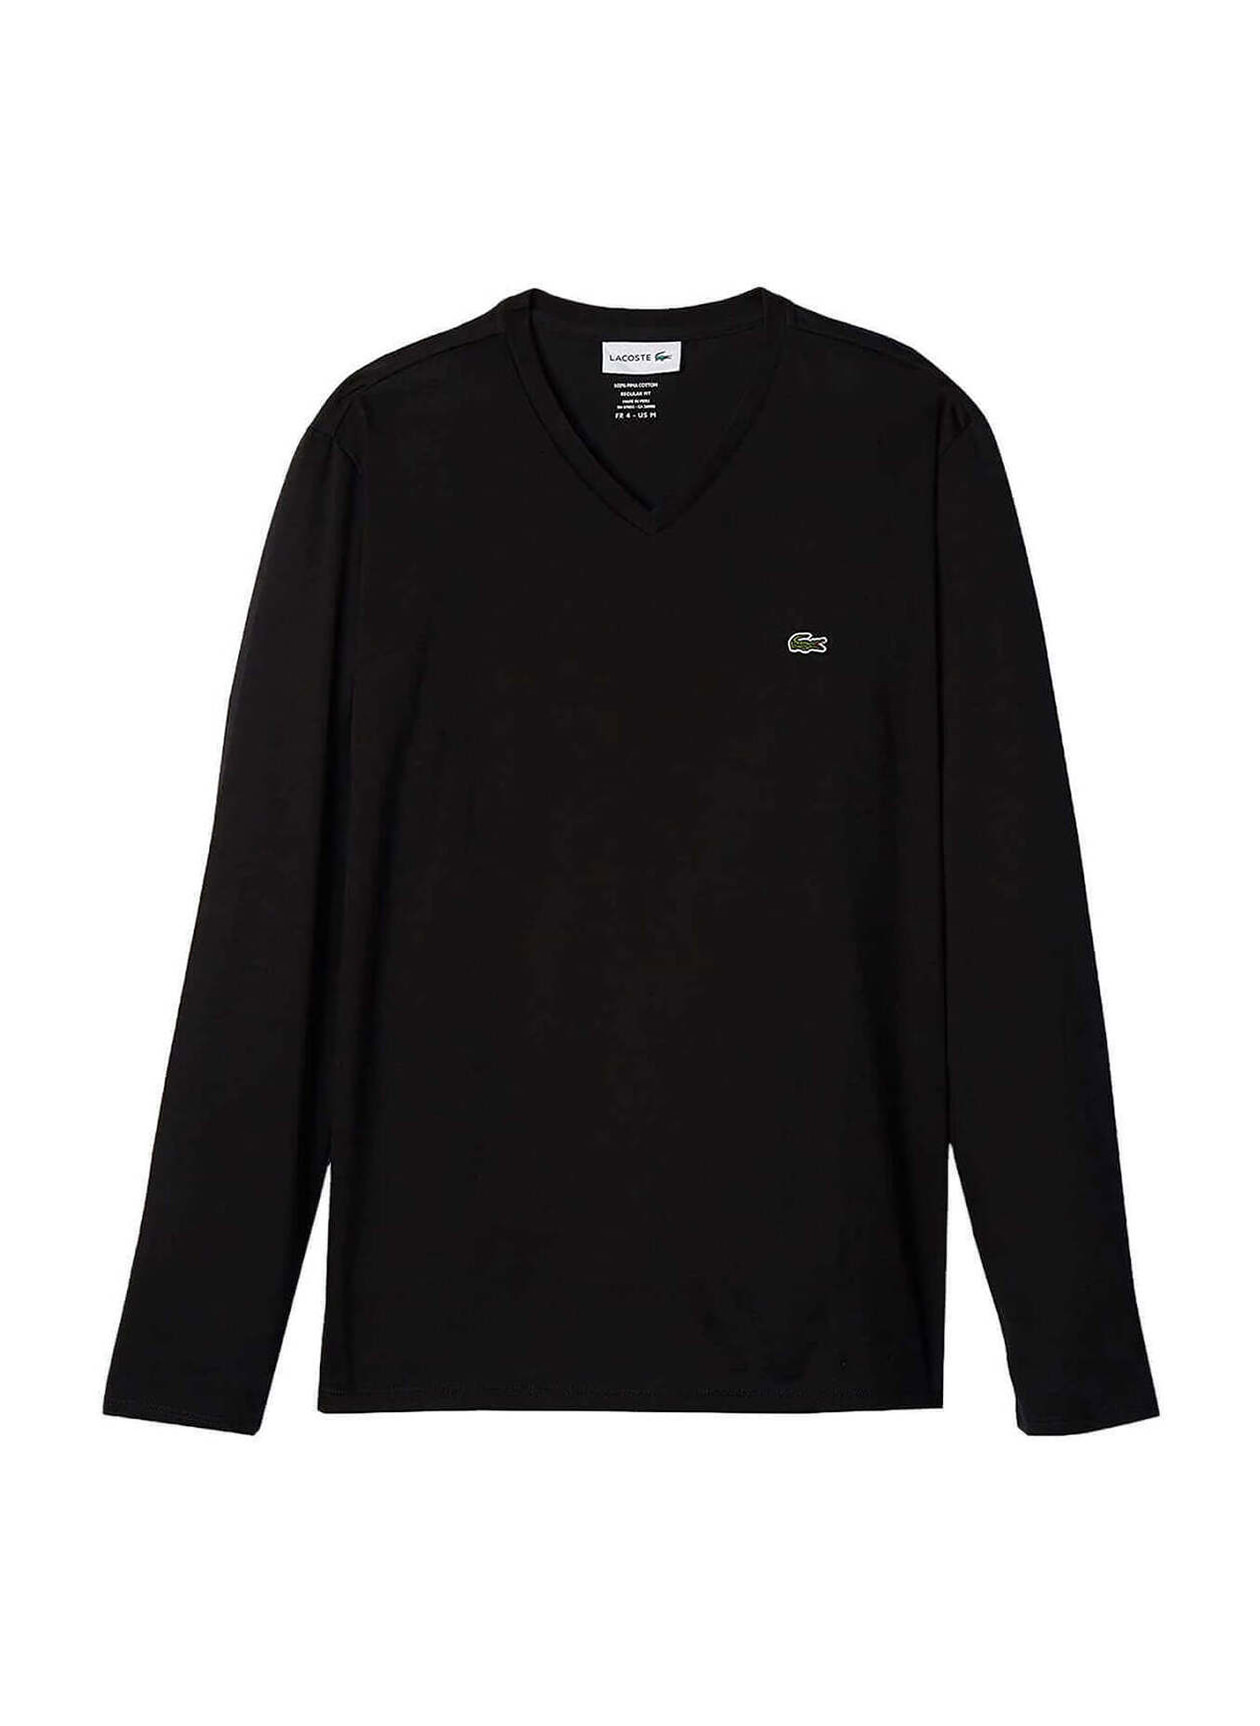 Lacoste Men's Black Pima V-Neck Long-Sleeve T-Shirt